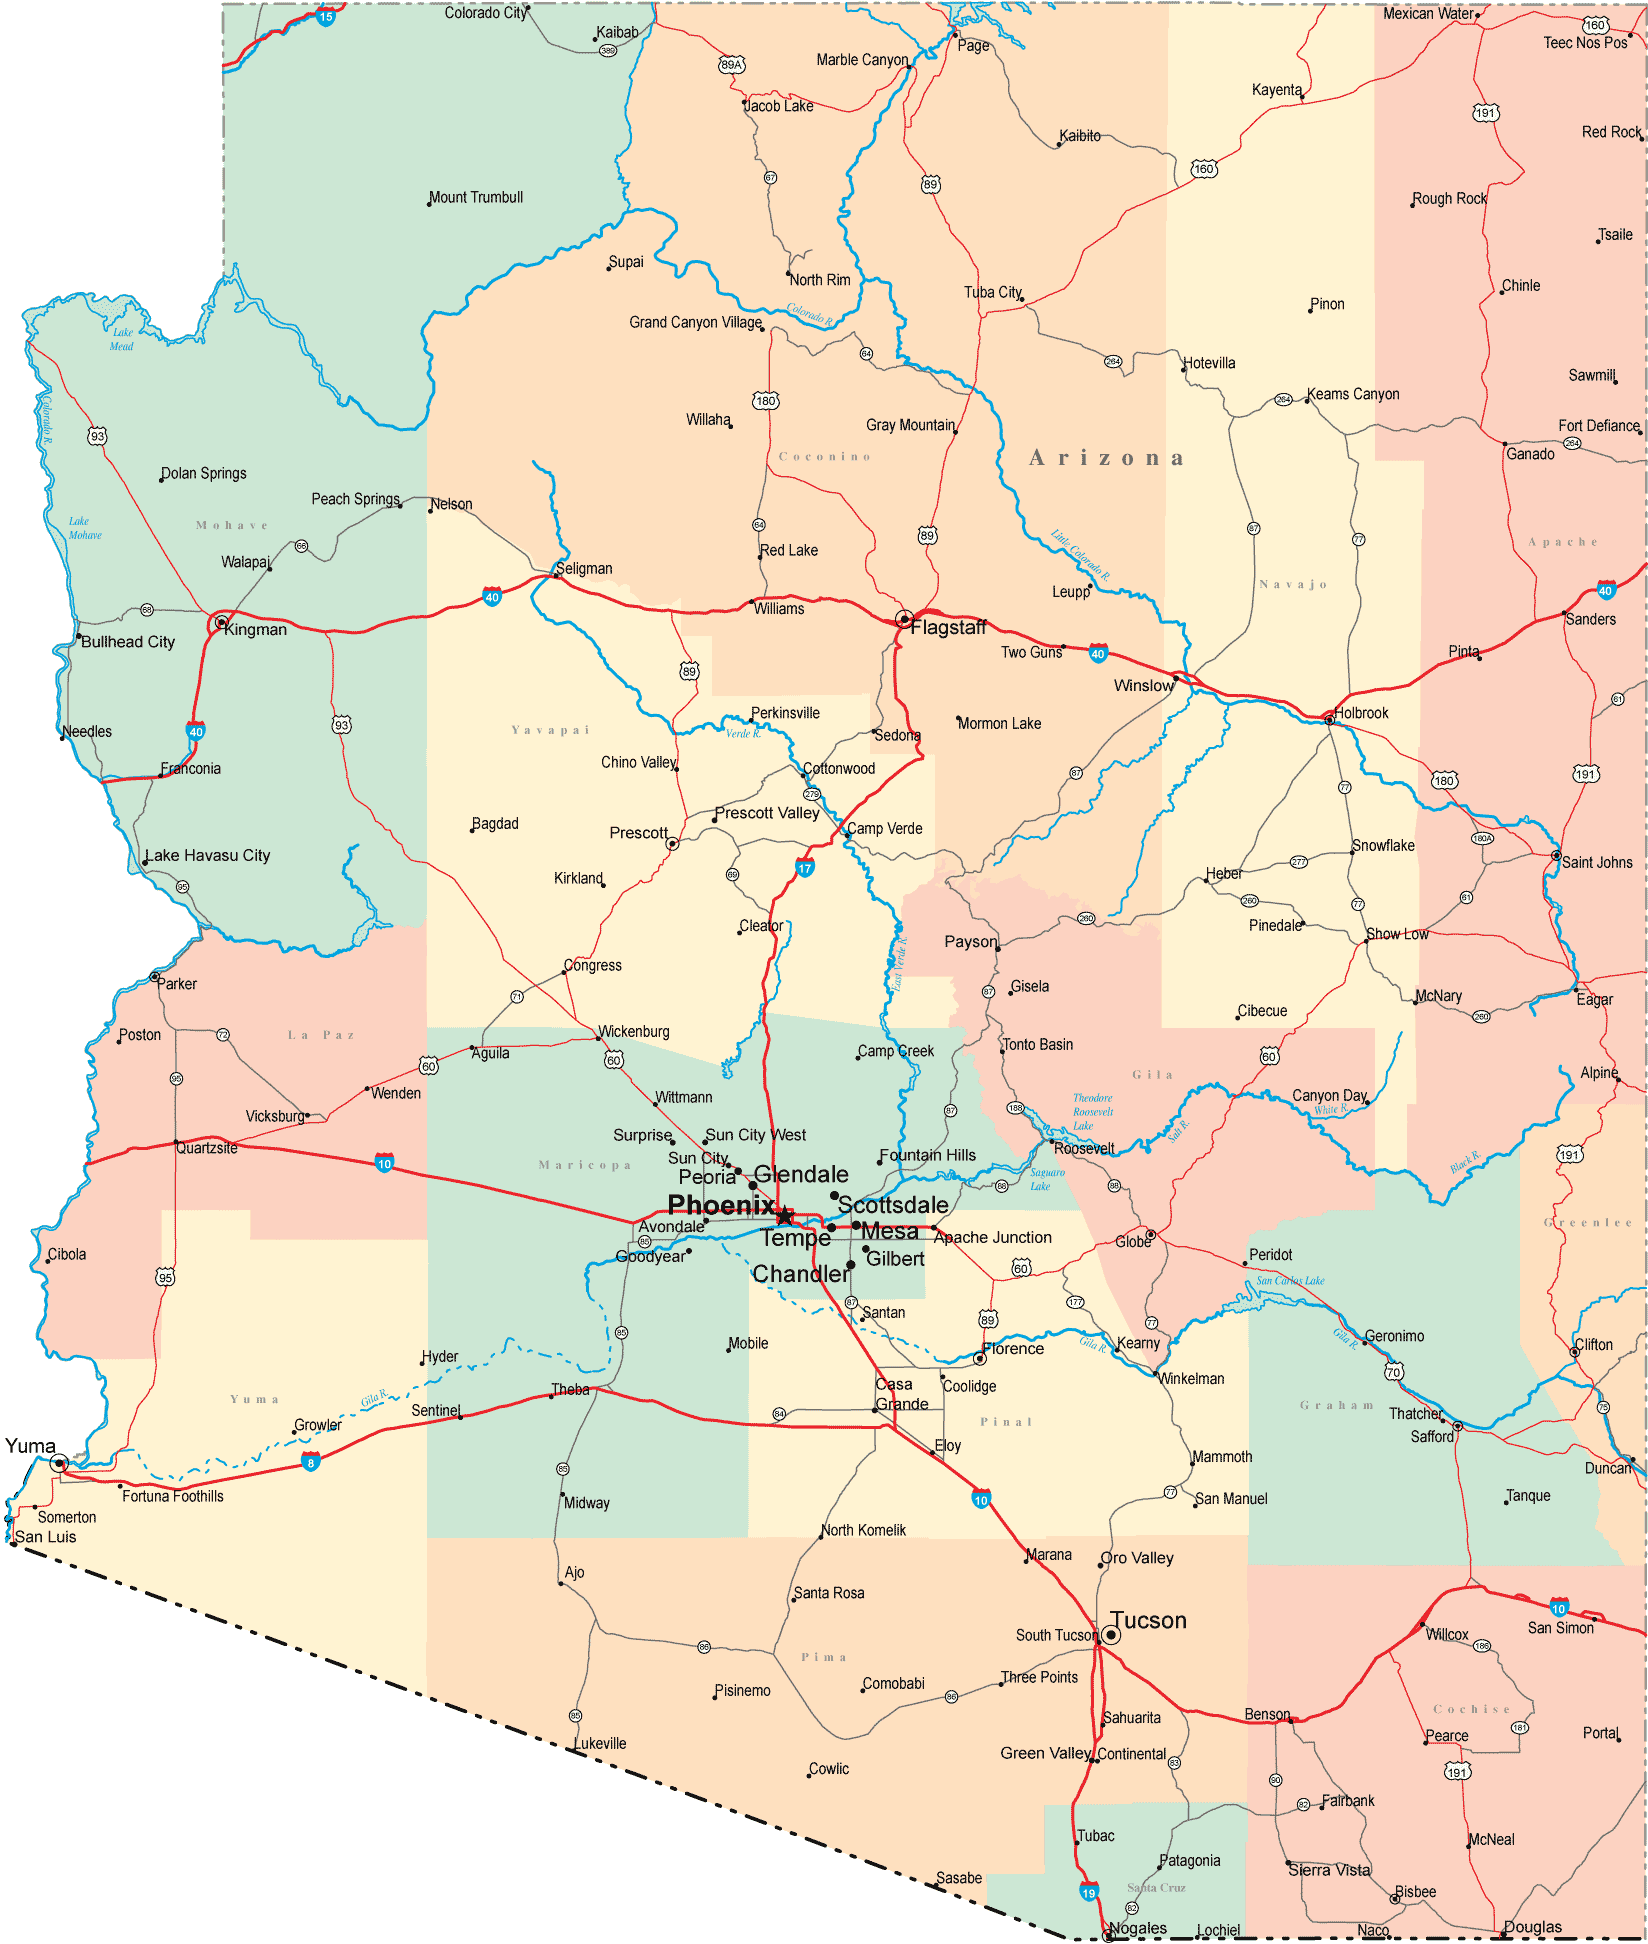 Arizona County Map With Roads Arizona Road Map   AZ Road Map   Arizona Highway Map